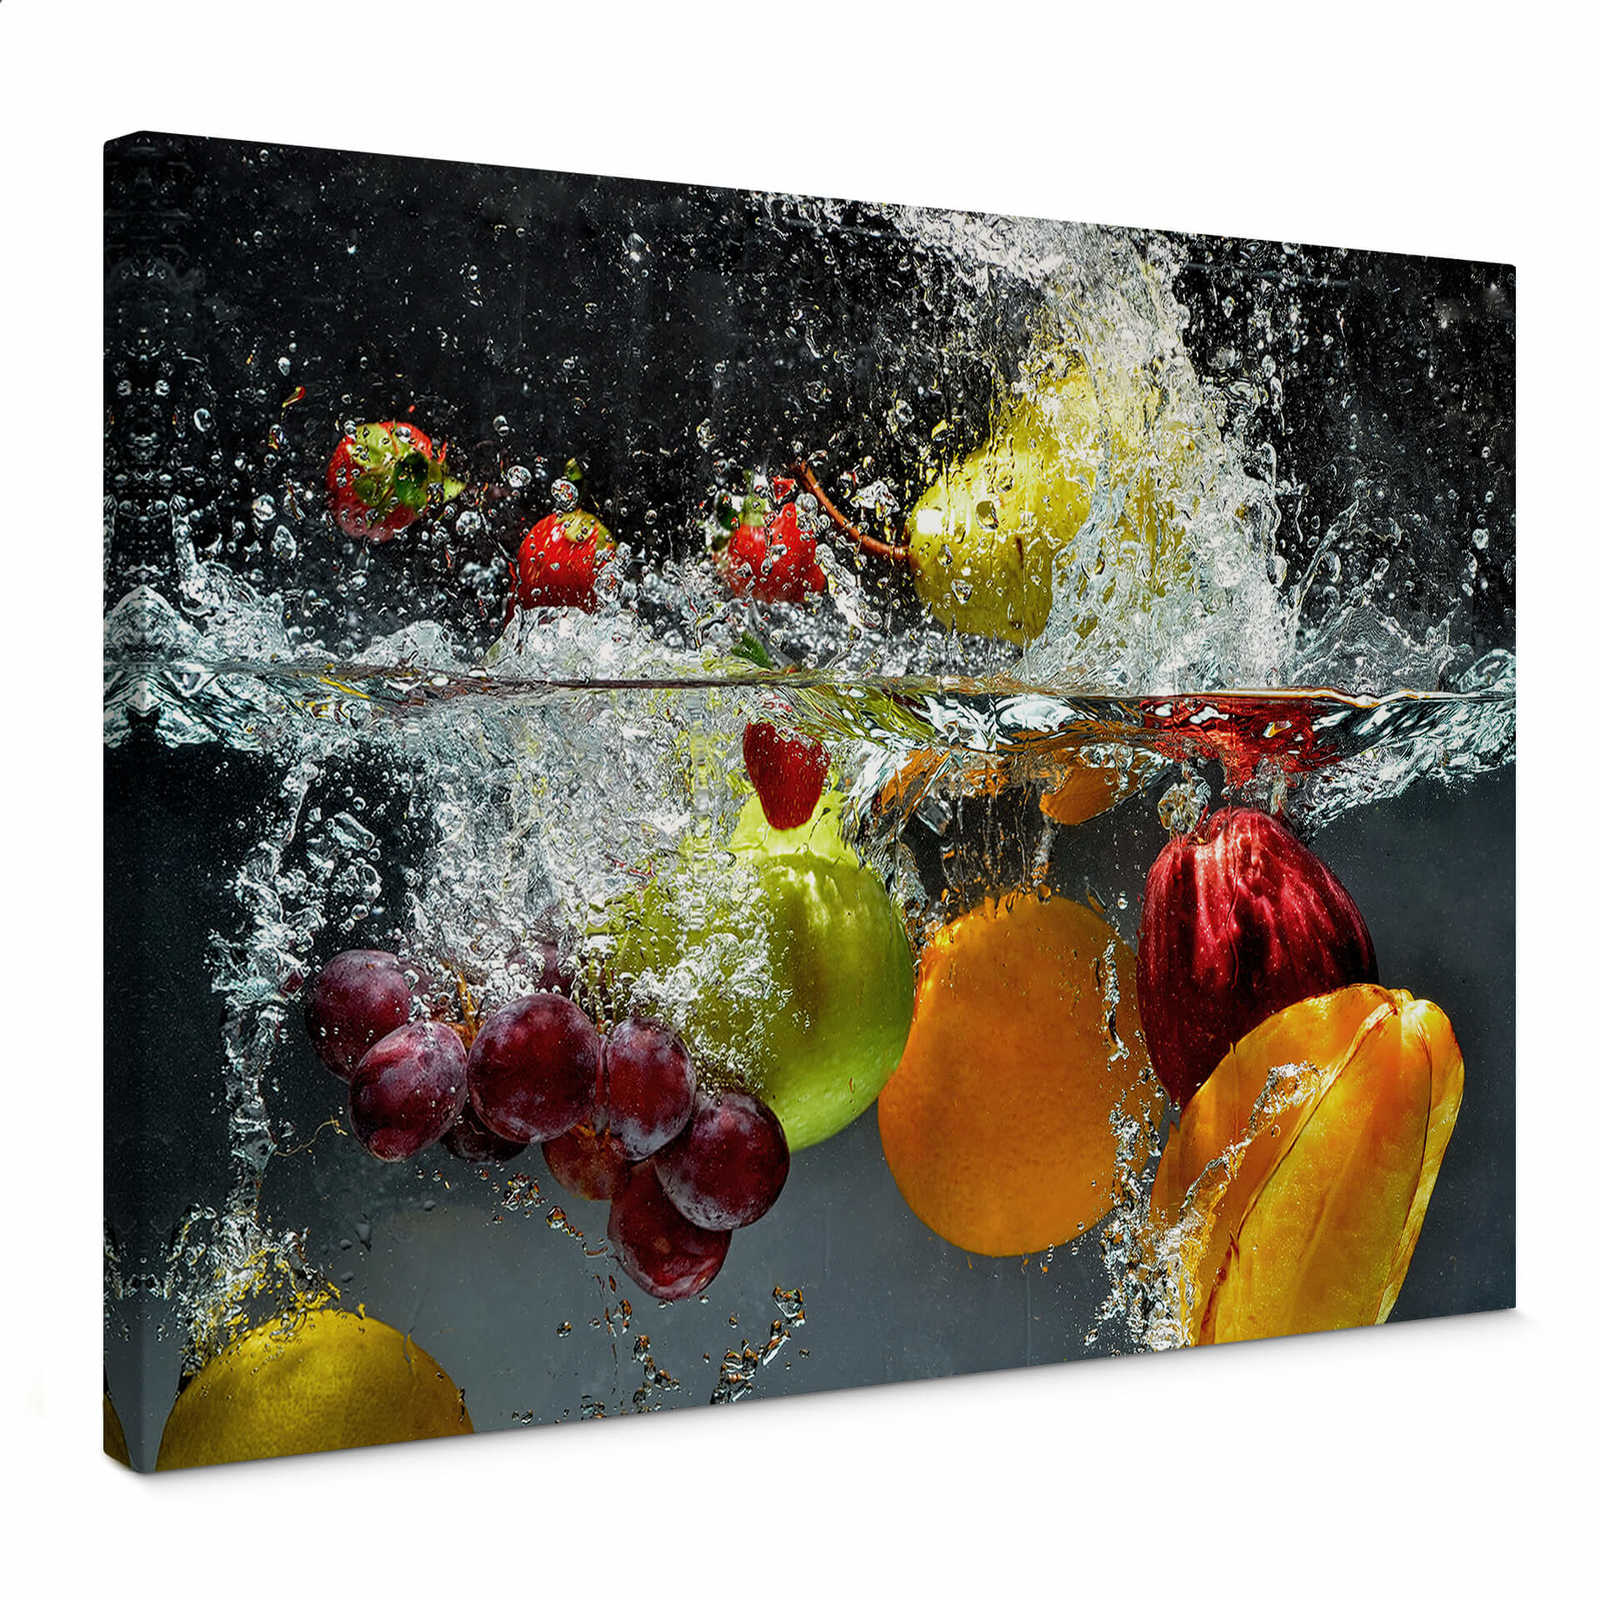         Canvas print fresh fruit in a water bath, colourful
    